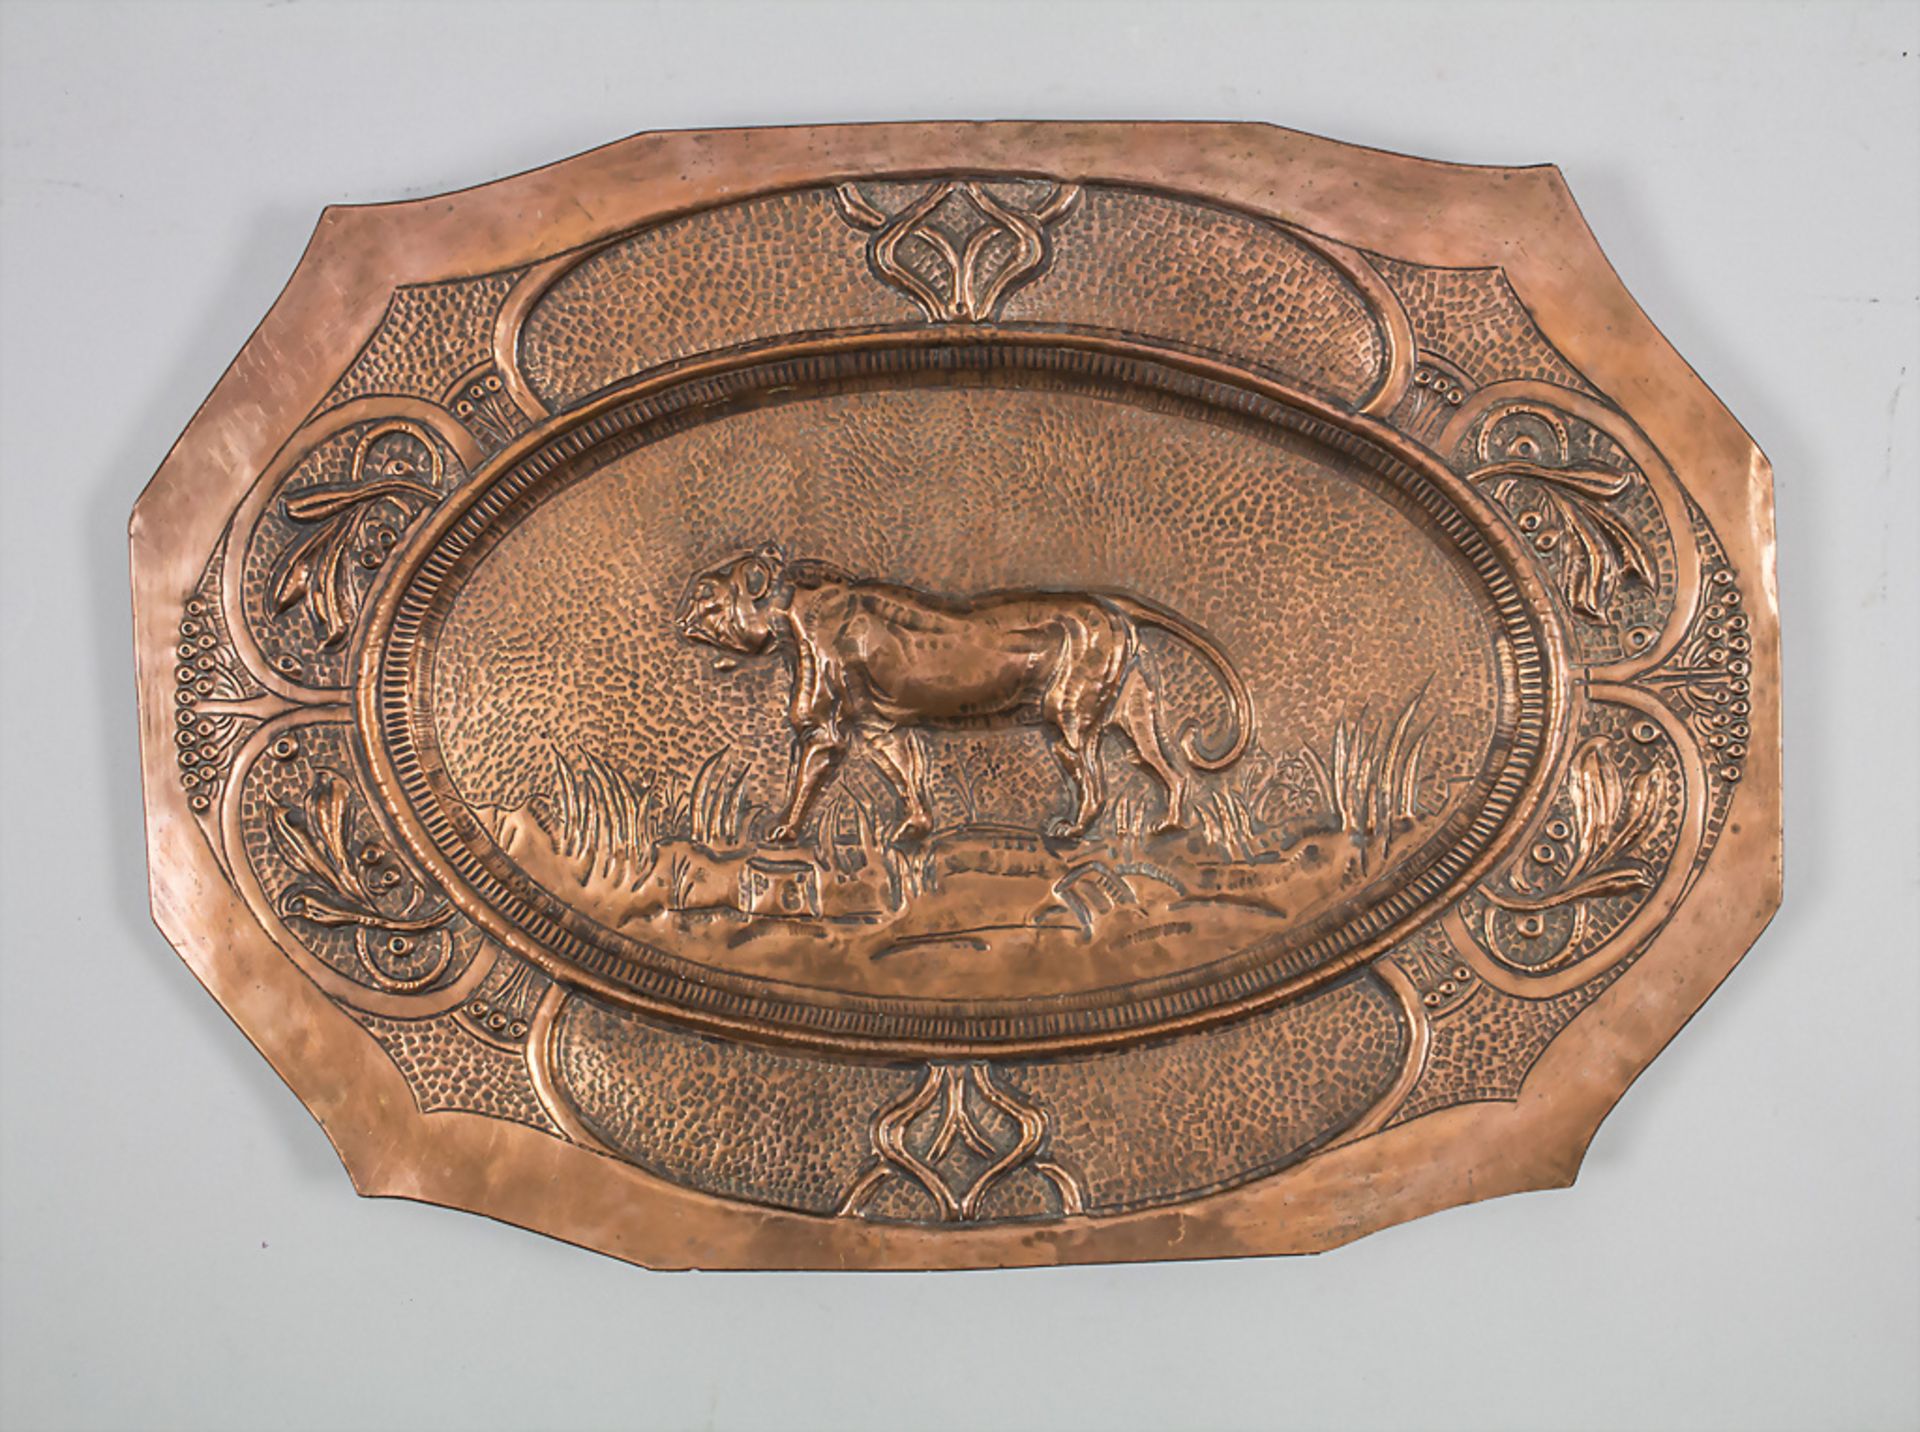 Kupfer-Wandplatte 'Panther' / A copper wall plate 'Panther'